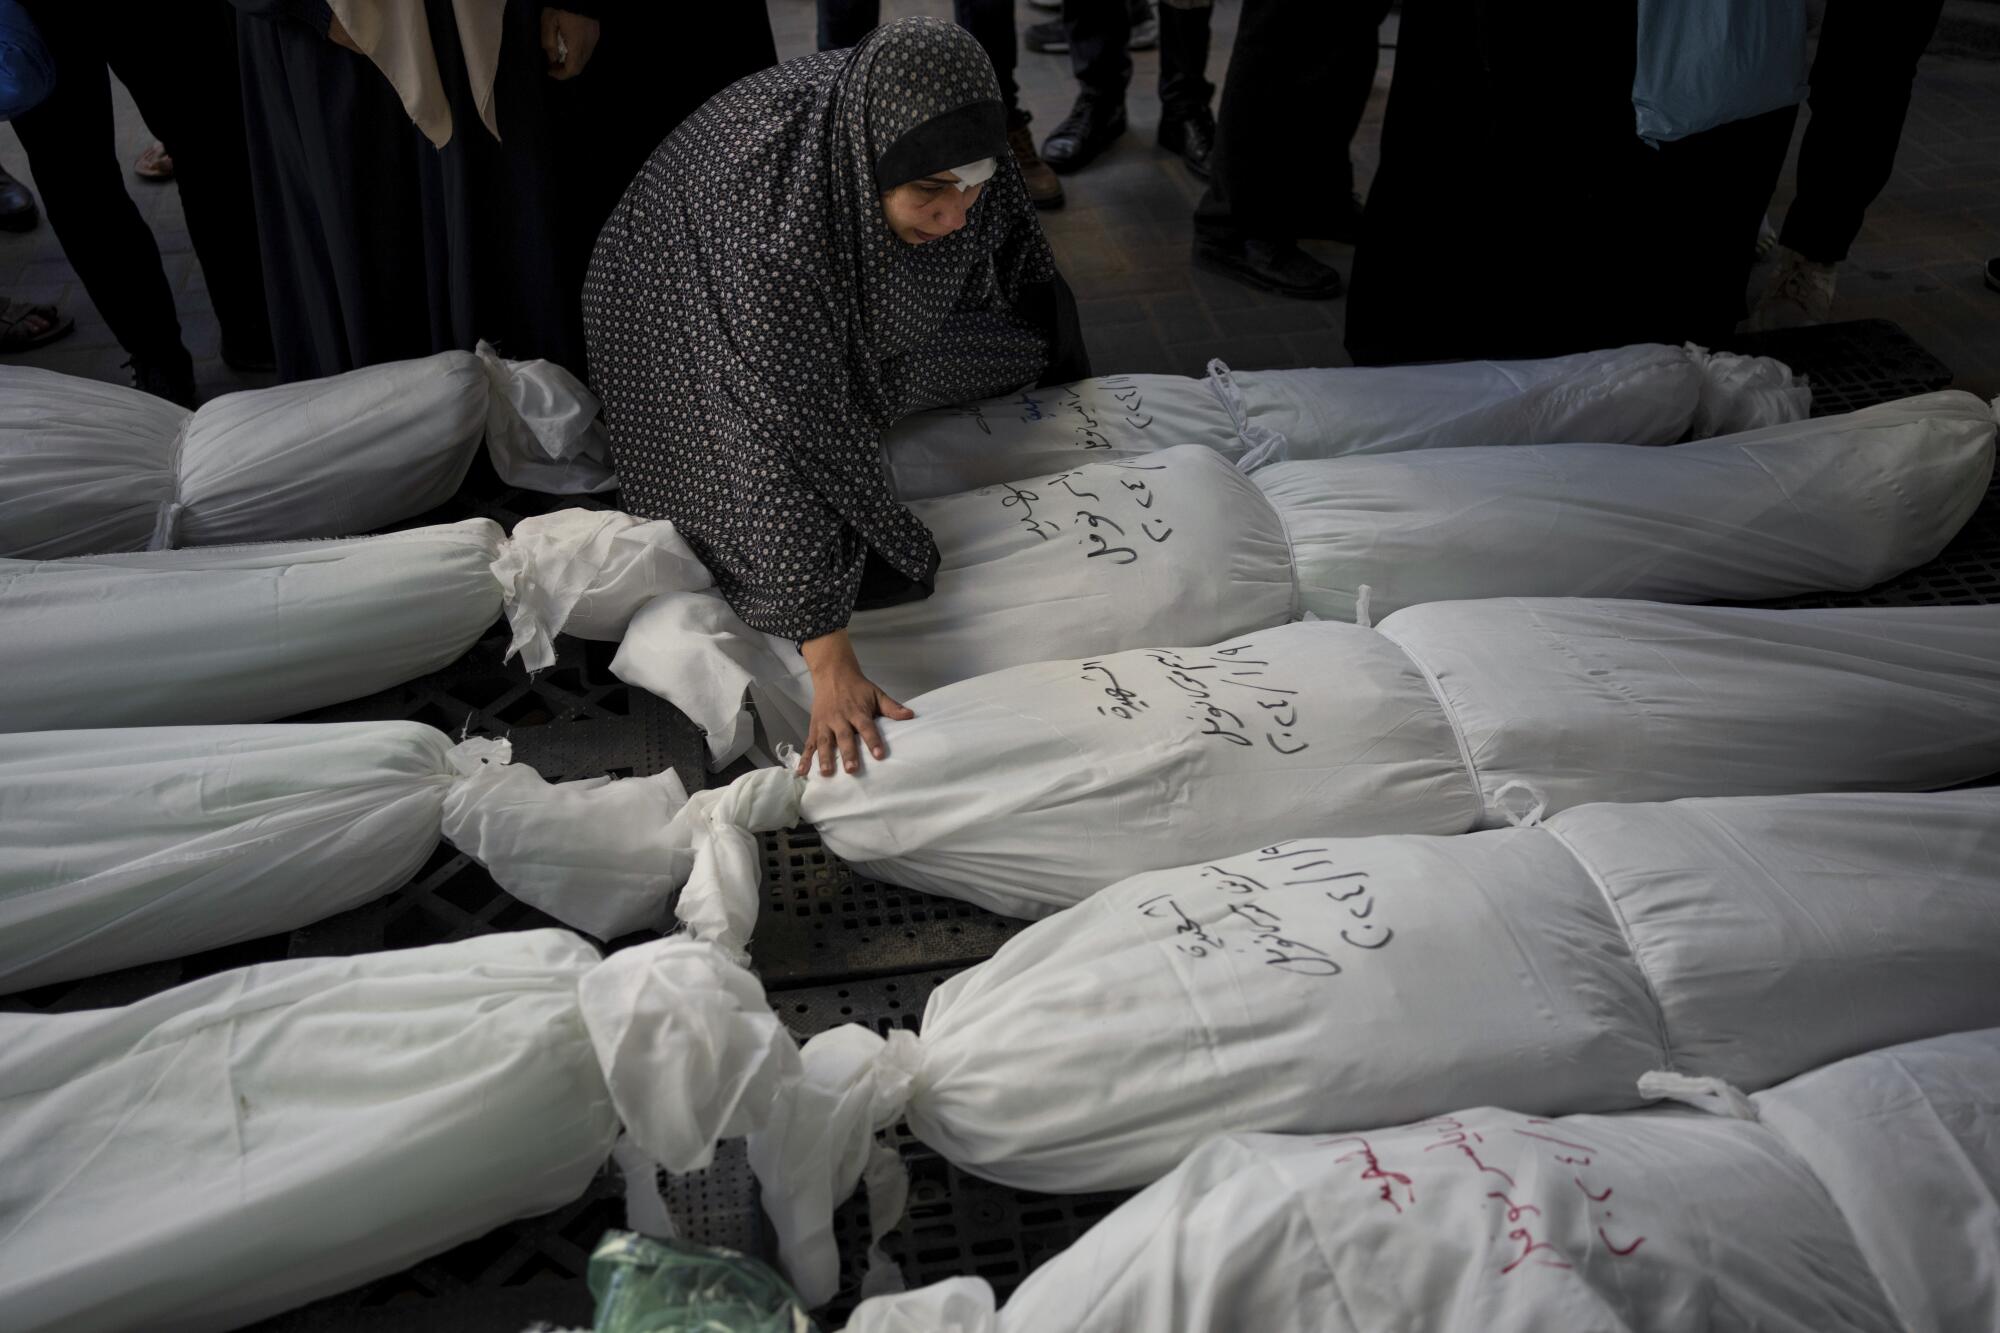 Palestinians mourning enshrouded relatives killed in Israel's bombardment of Gaza